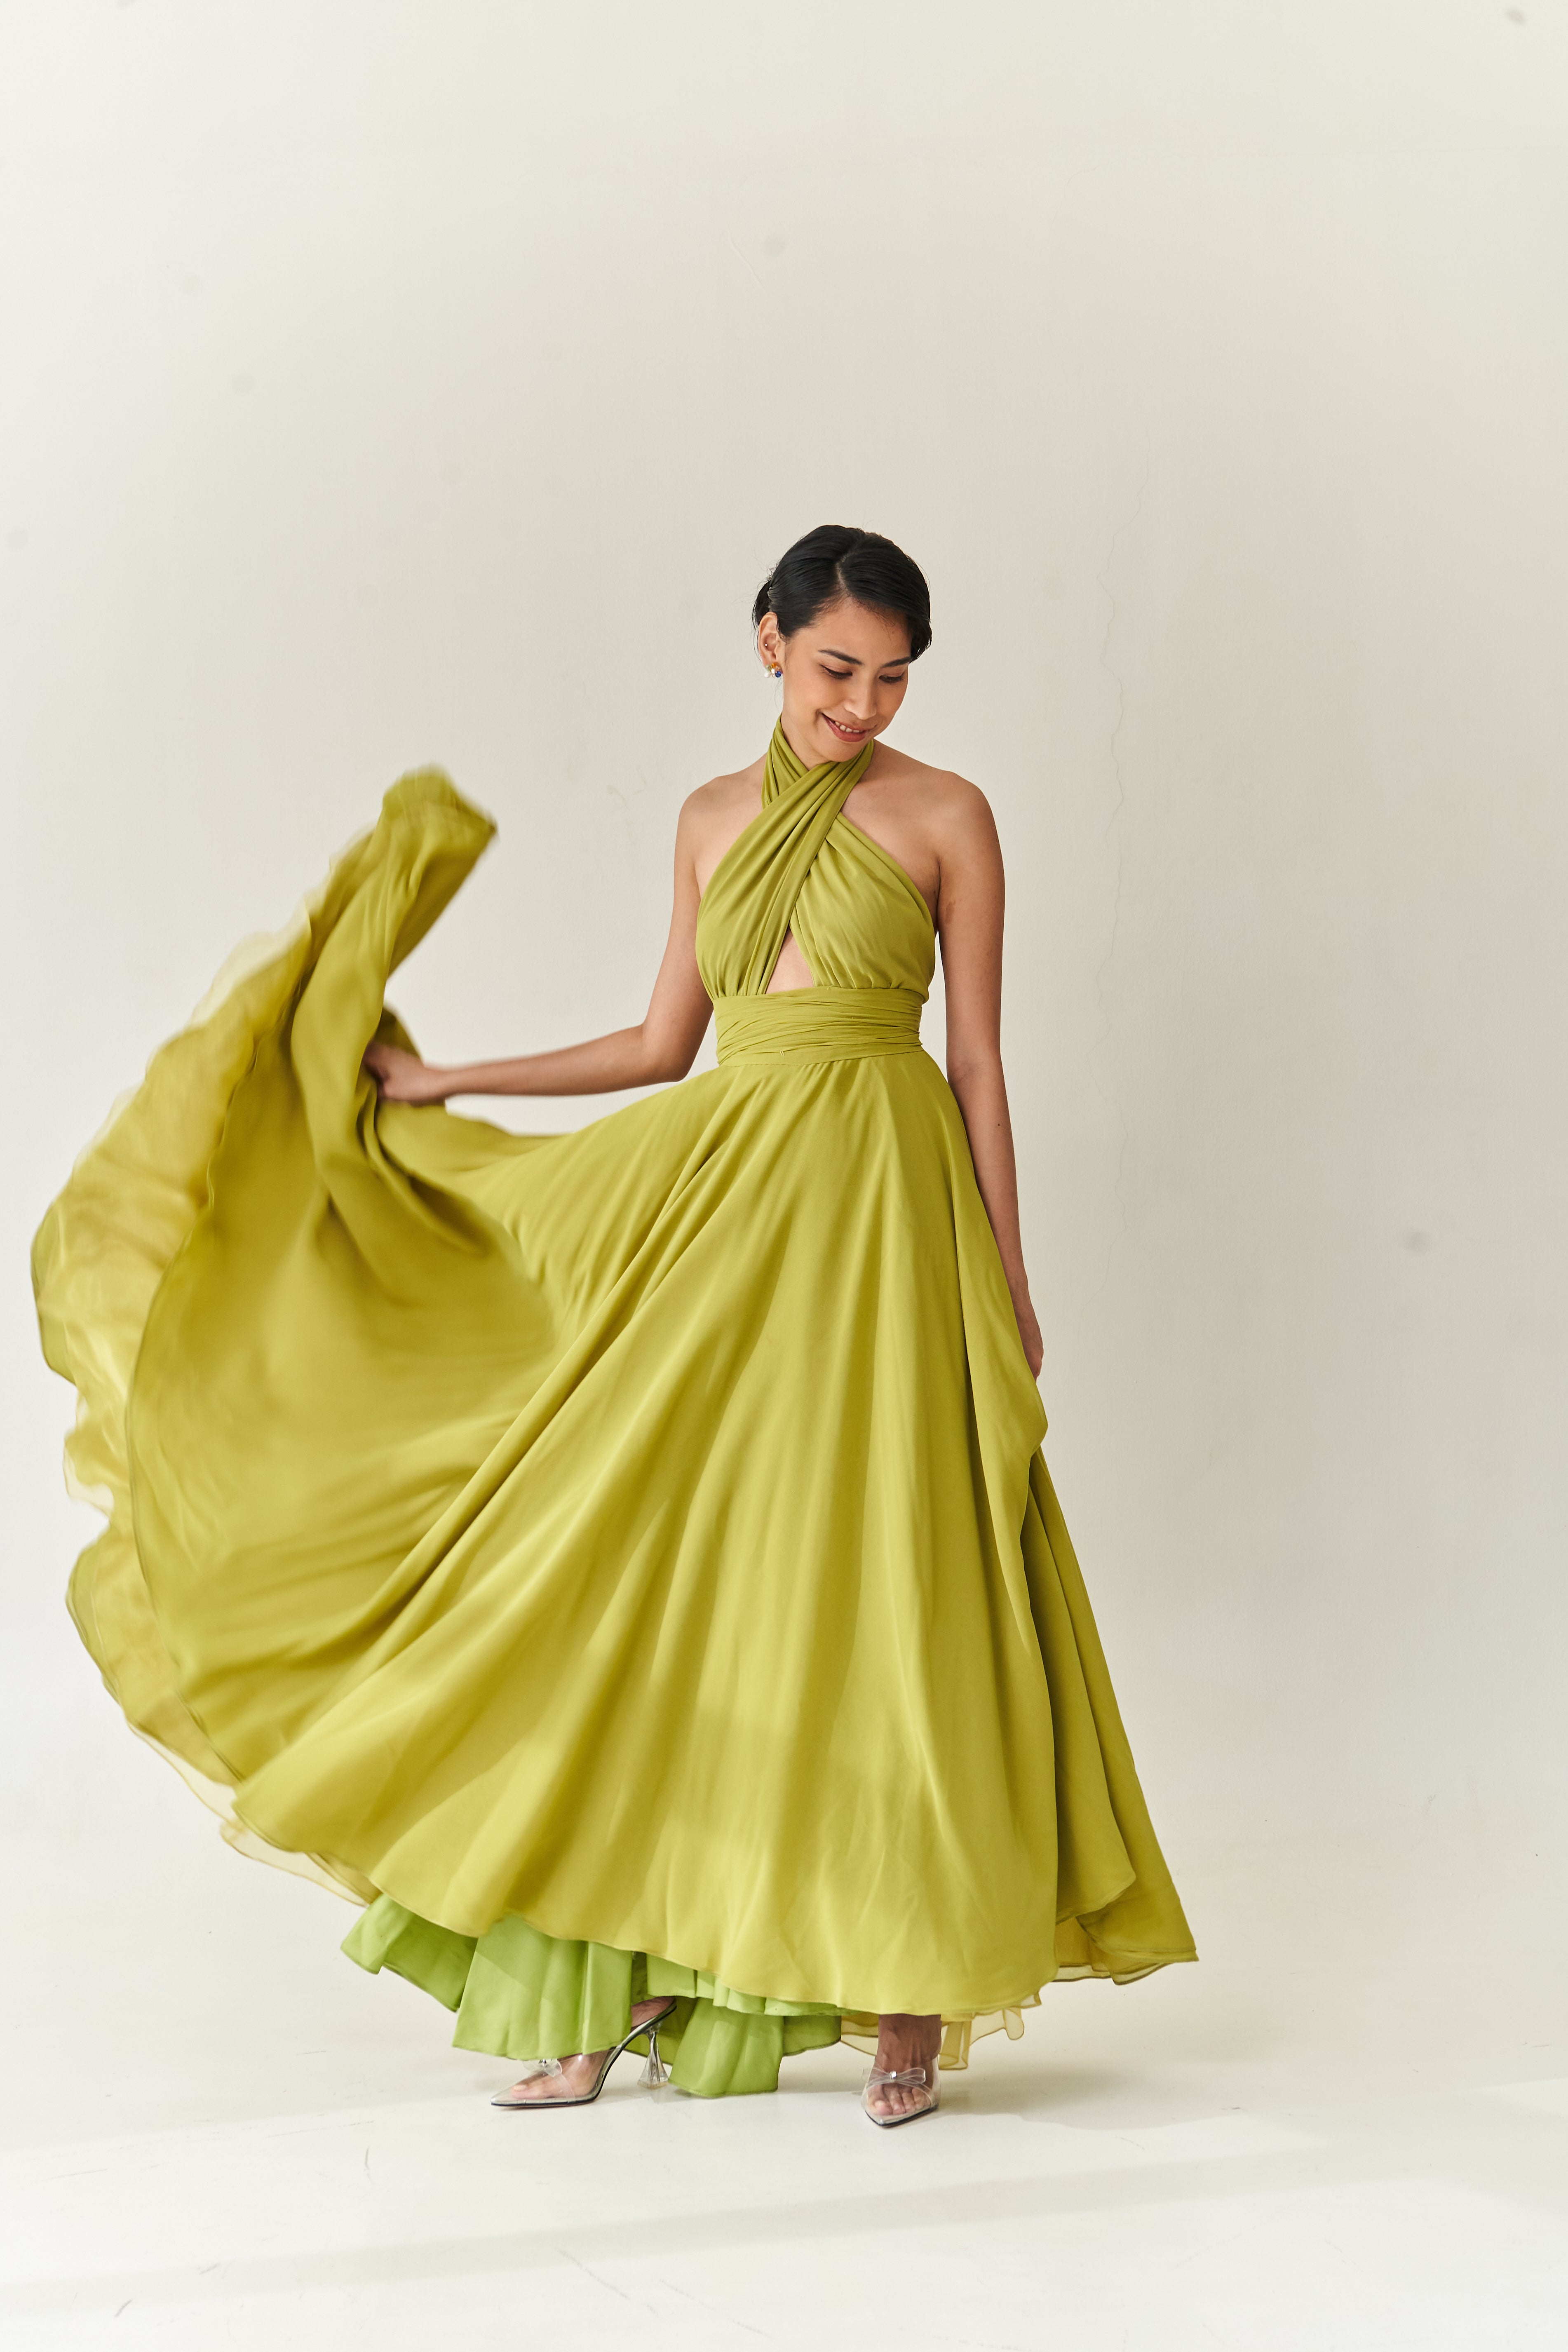 Aurora - RoyAnne Camillia Couture- Bridal Gowns and Gown rentals in  ManilaRoyAnne Camillia Couture- Bridal Gowns and Gown rentals in Manila